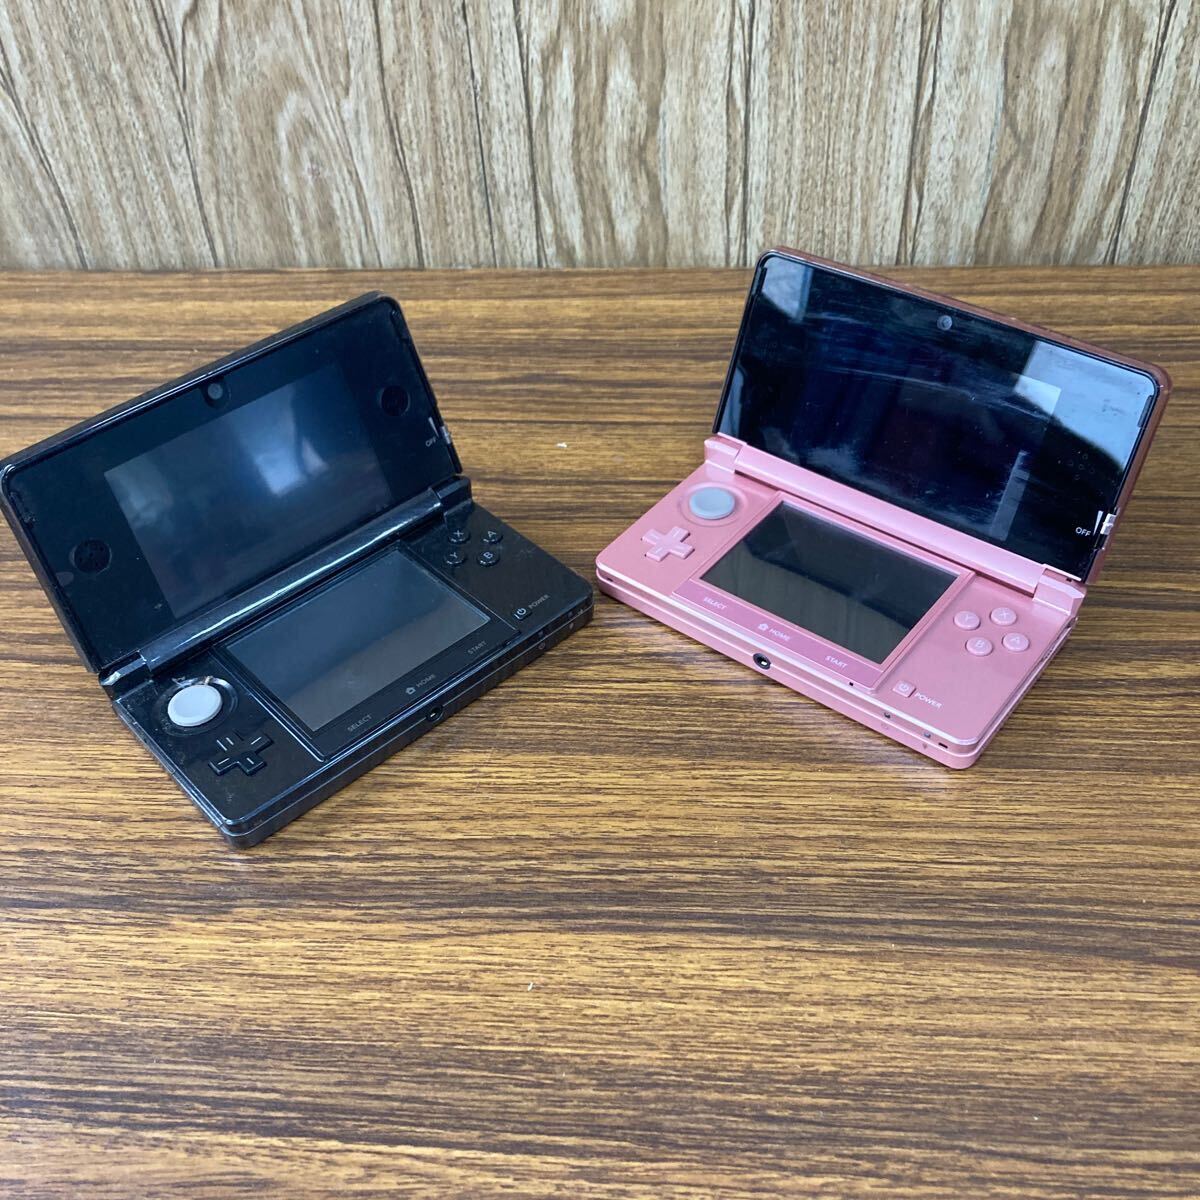  Nintendo 3DS body CTR-001 pink /bla together 2 pcs. set Nintendo nintendo retro game 